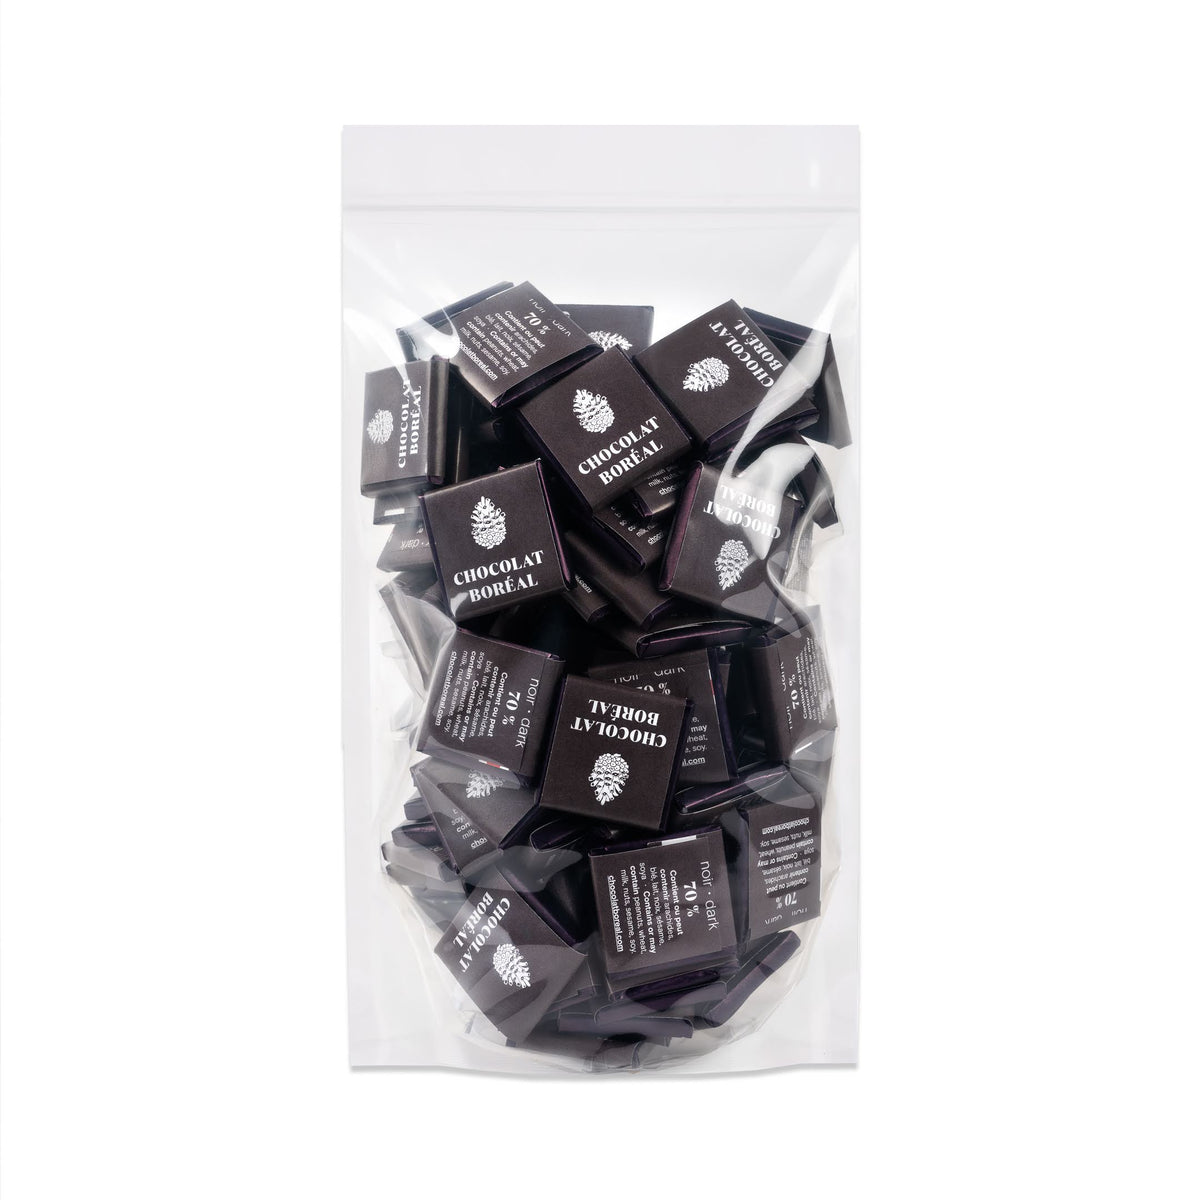 100 DARK chocolate squares - 0.50$ each